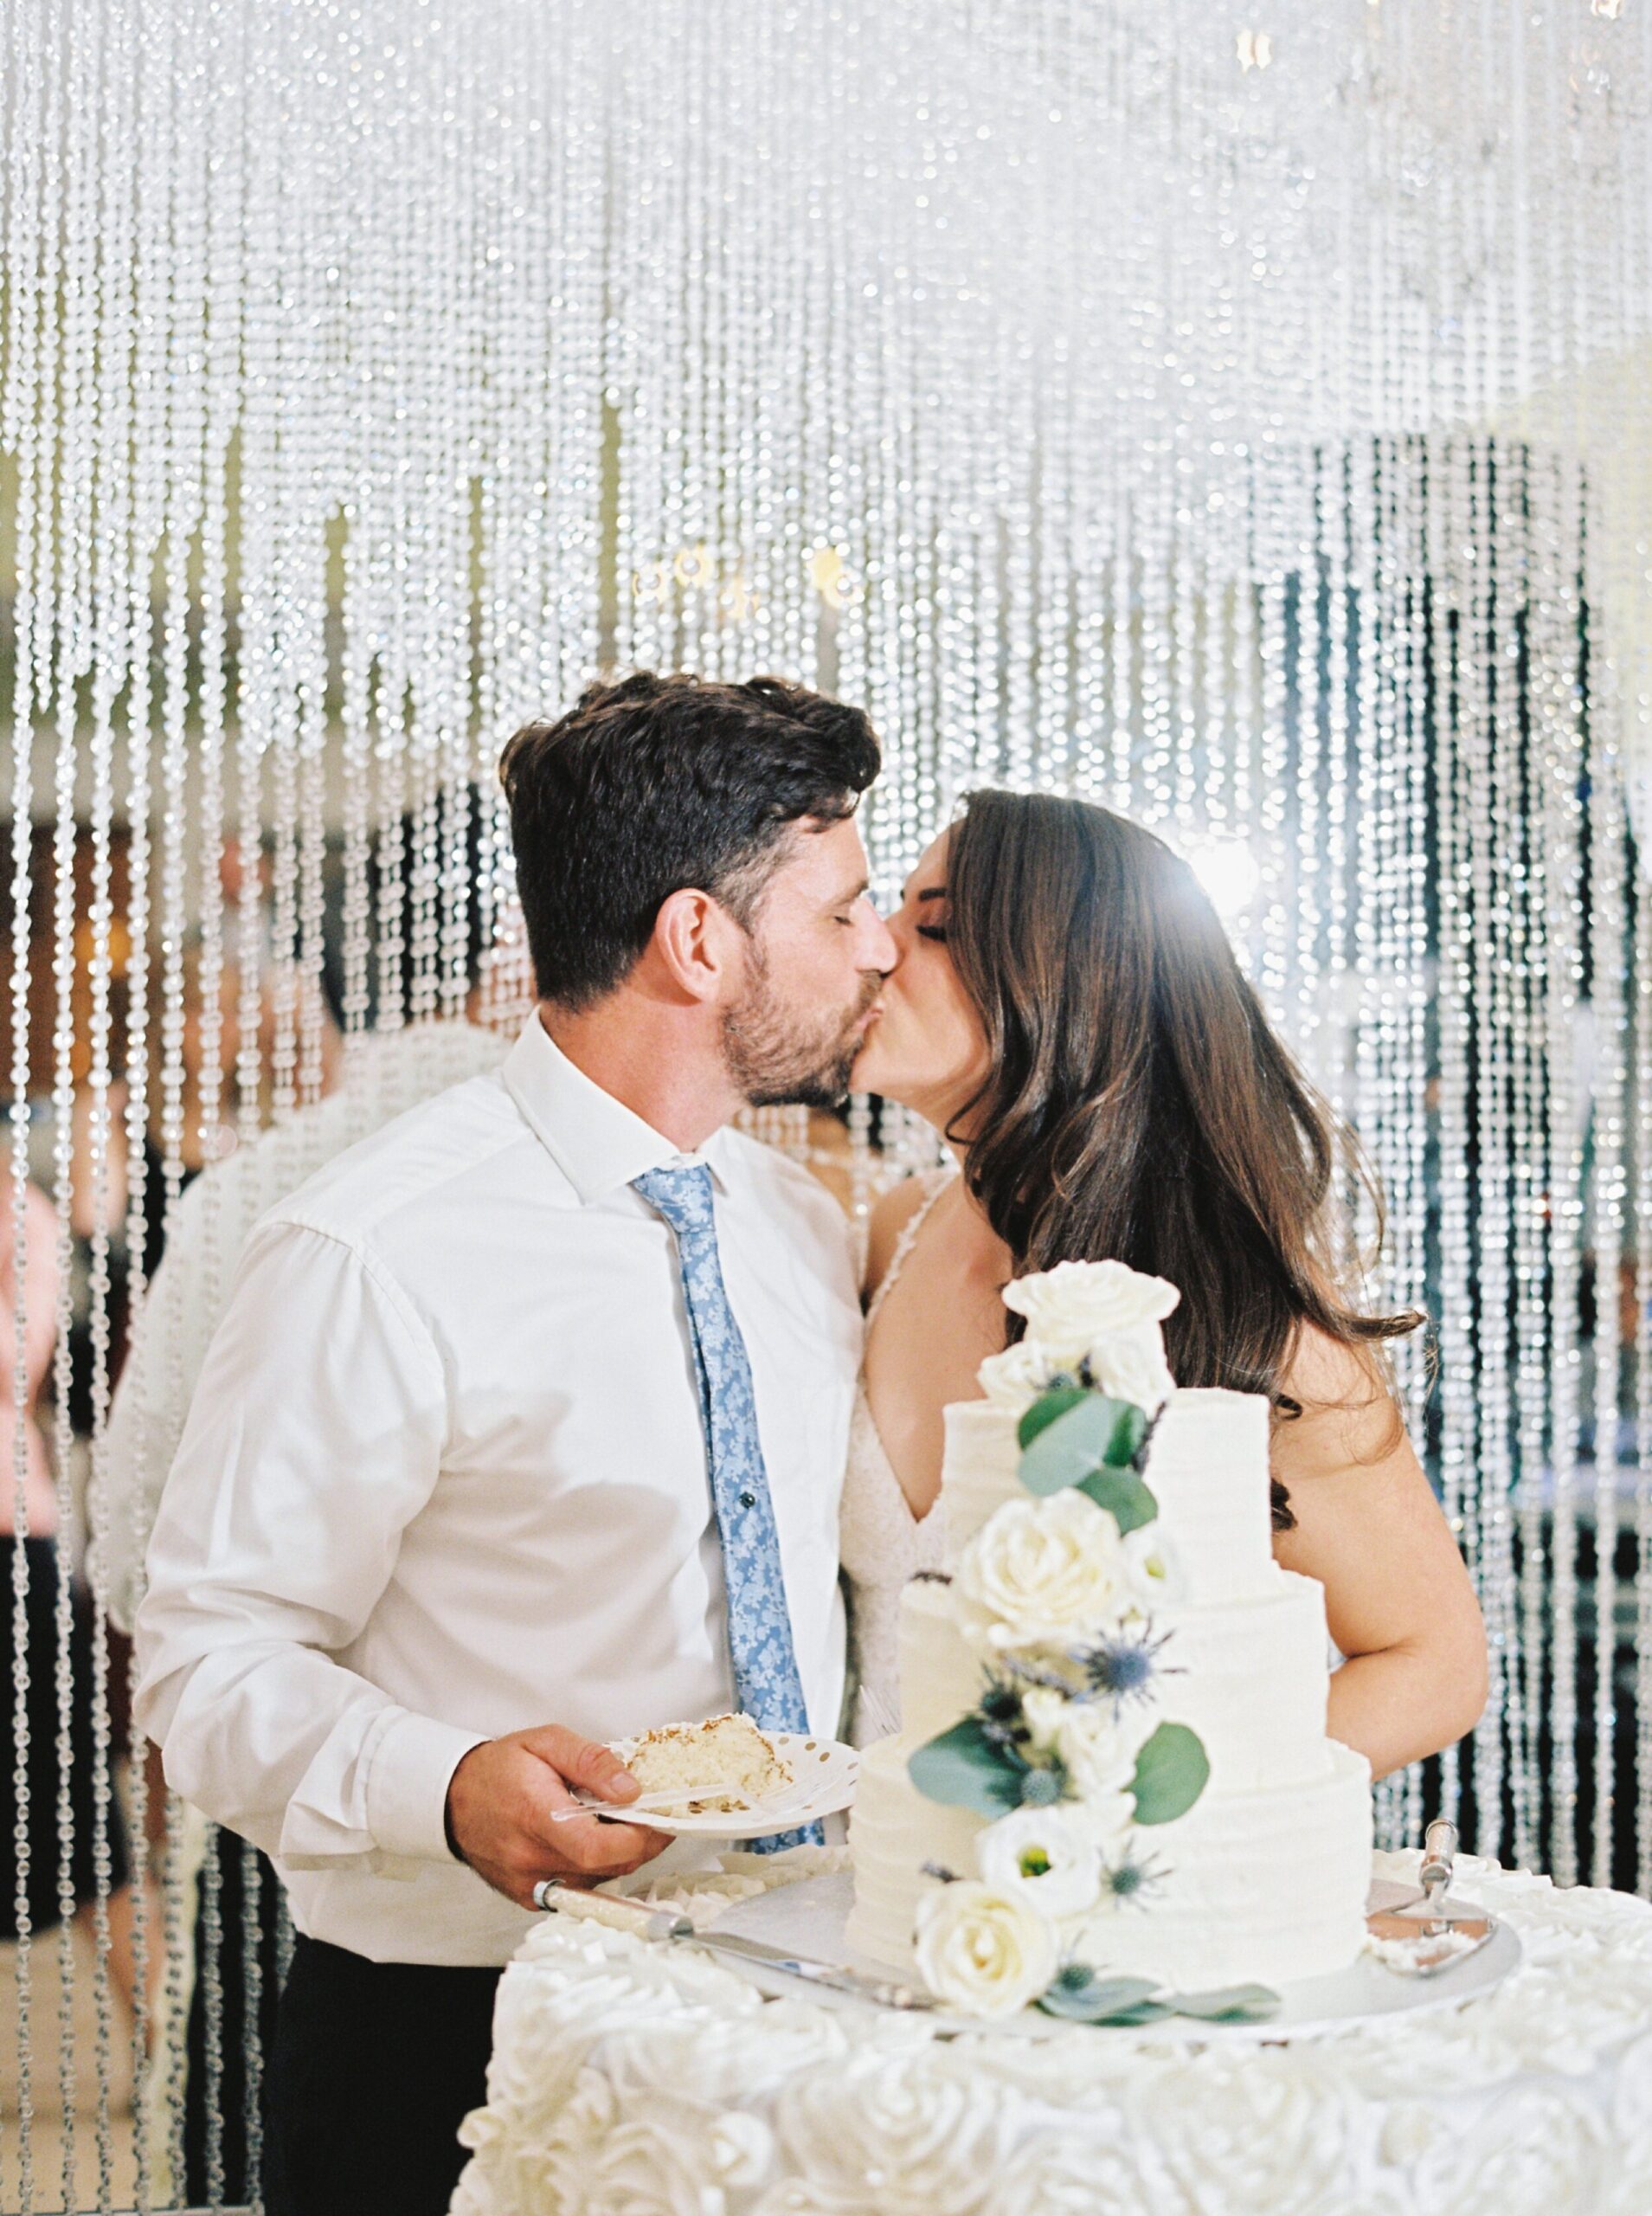  kelowna wedding photographer | wedding reception bride and groom cutting the cake | fine art film photographer justine milton photography 